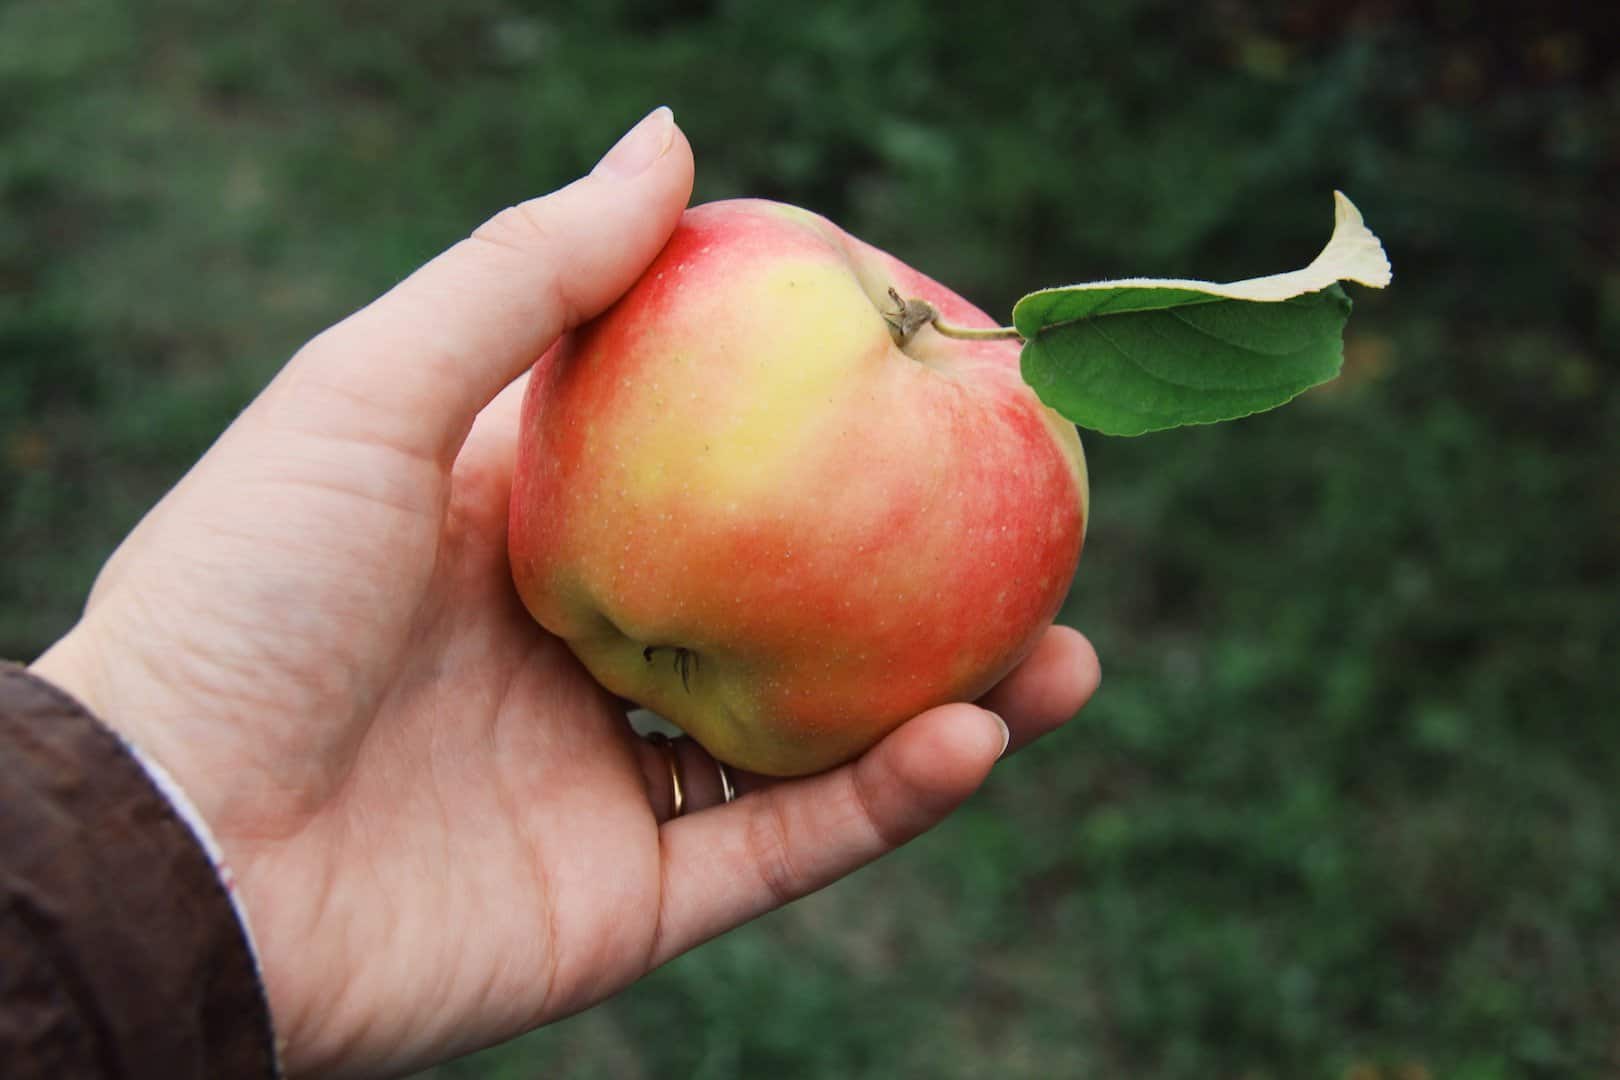 Apple picking during autumn harvest season - apple tree to grow